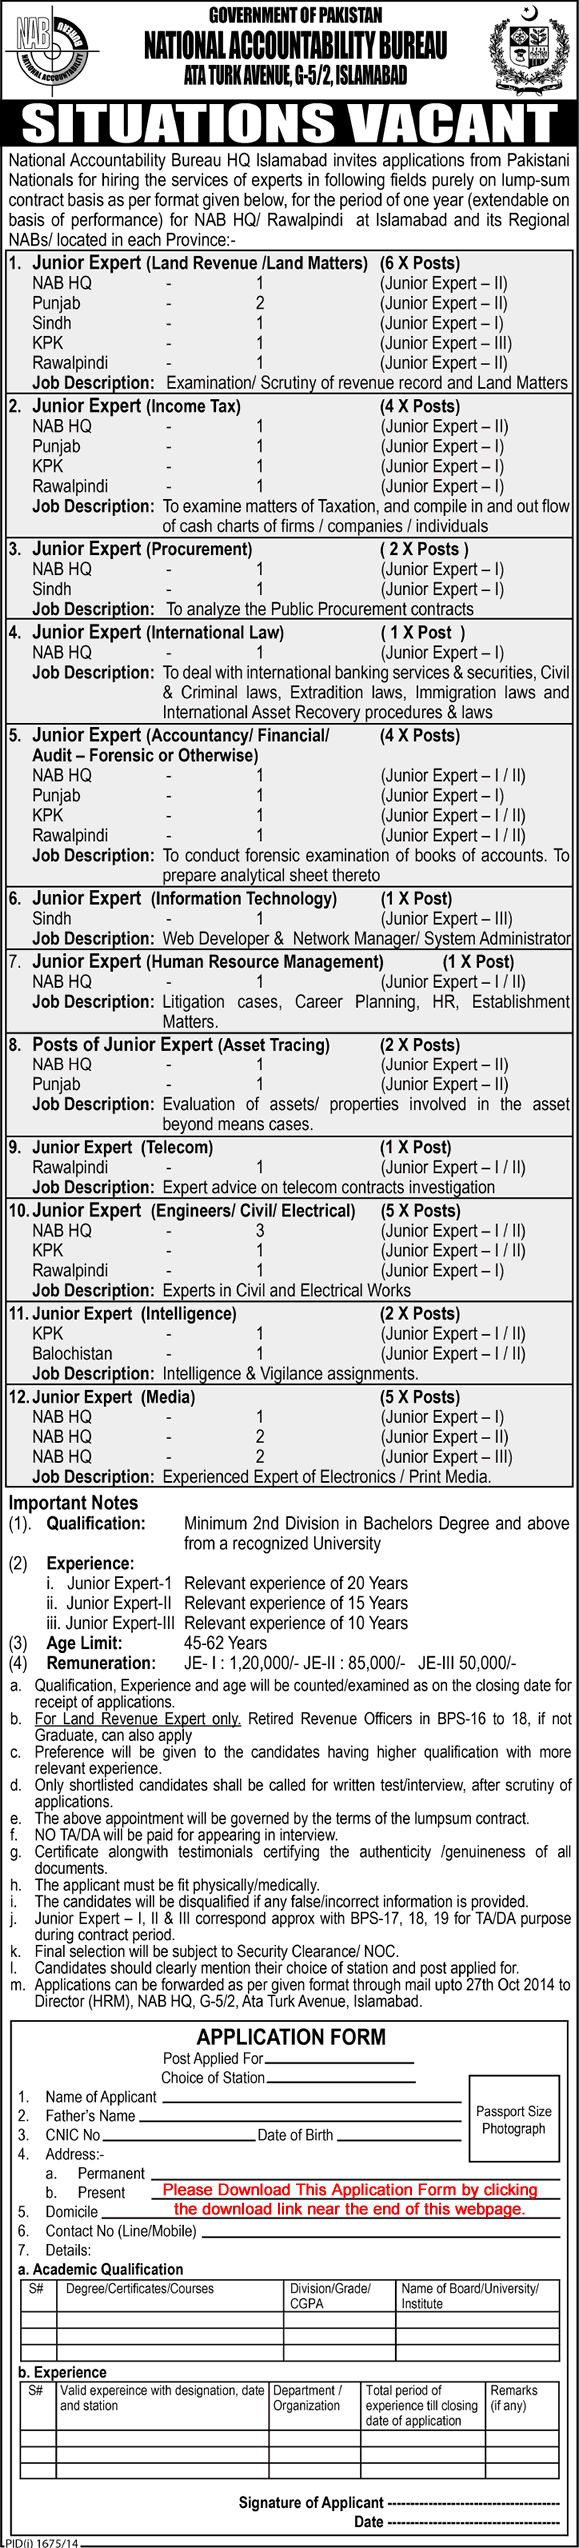 National Accountability Bureau Jobs 2014 October Application Form Download Pakistan